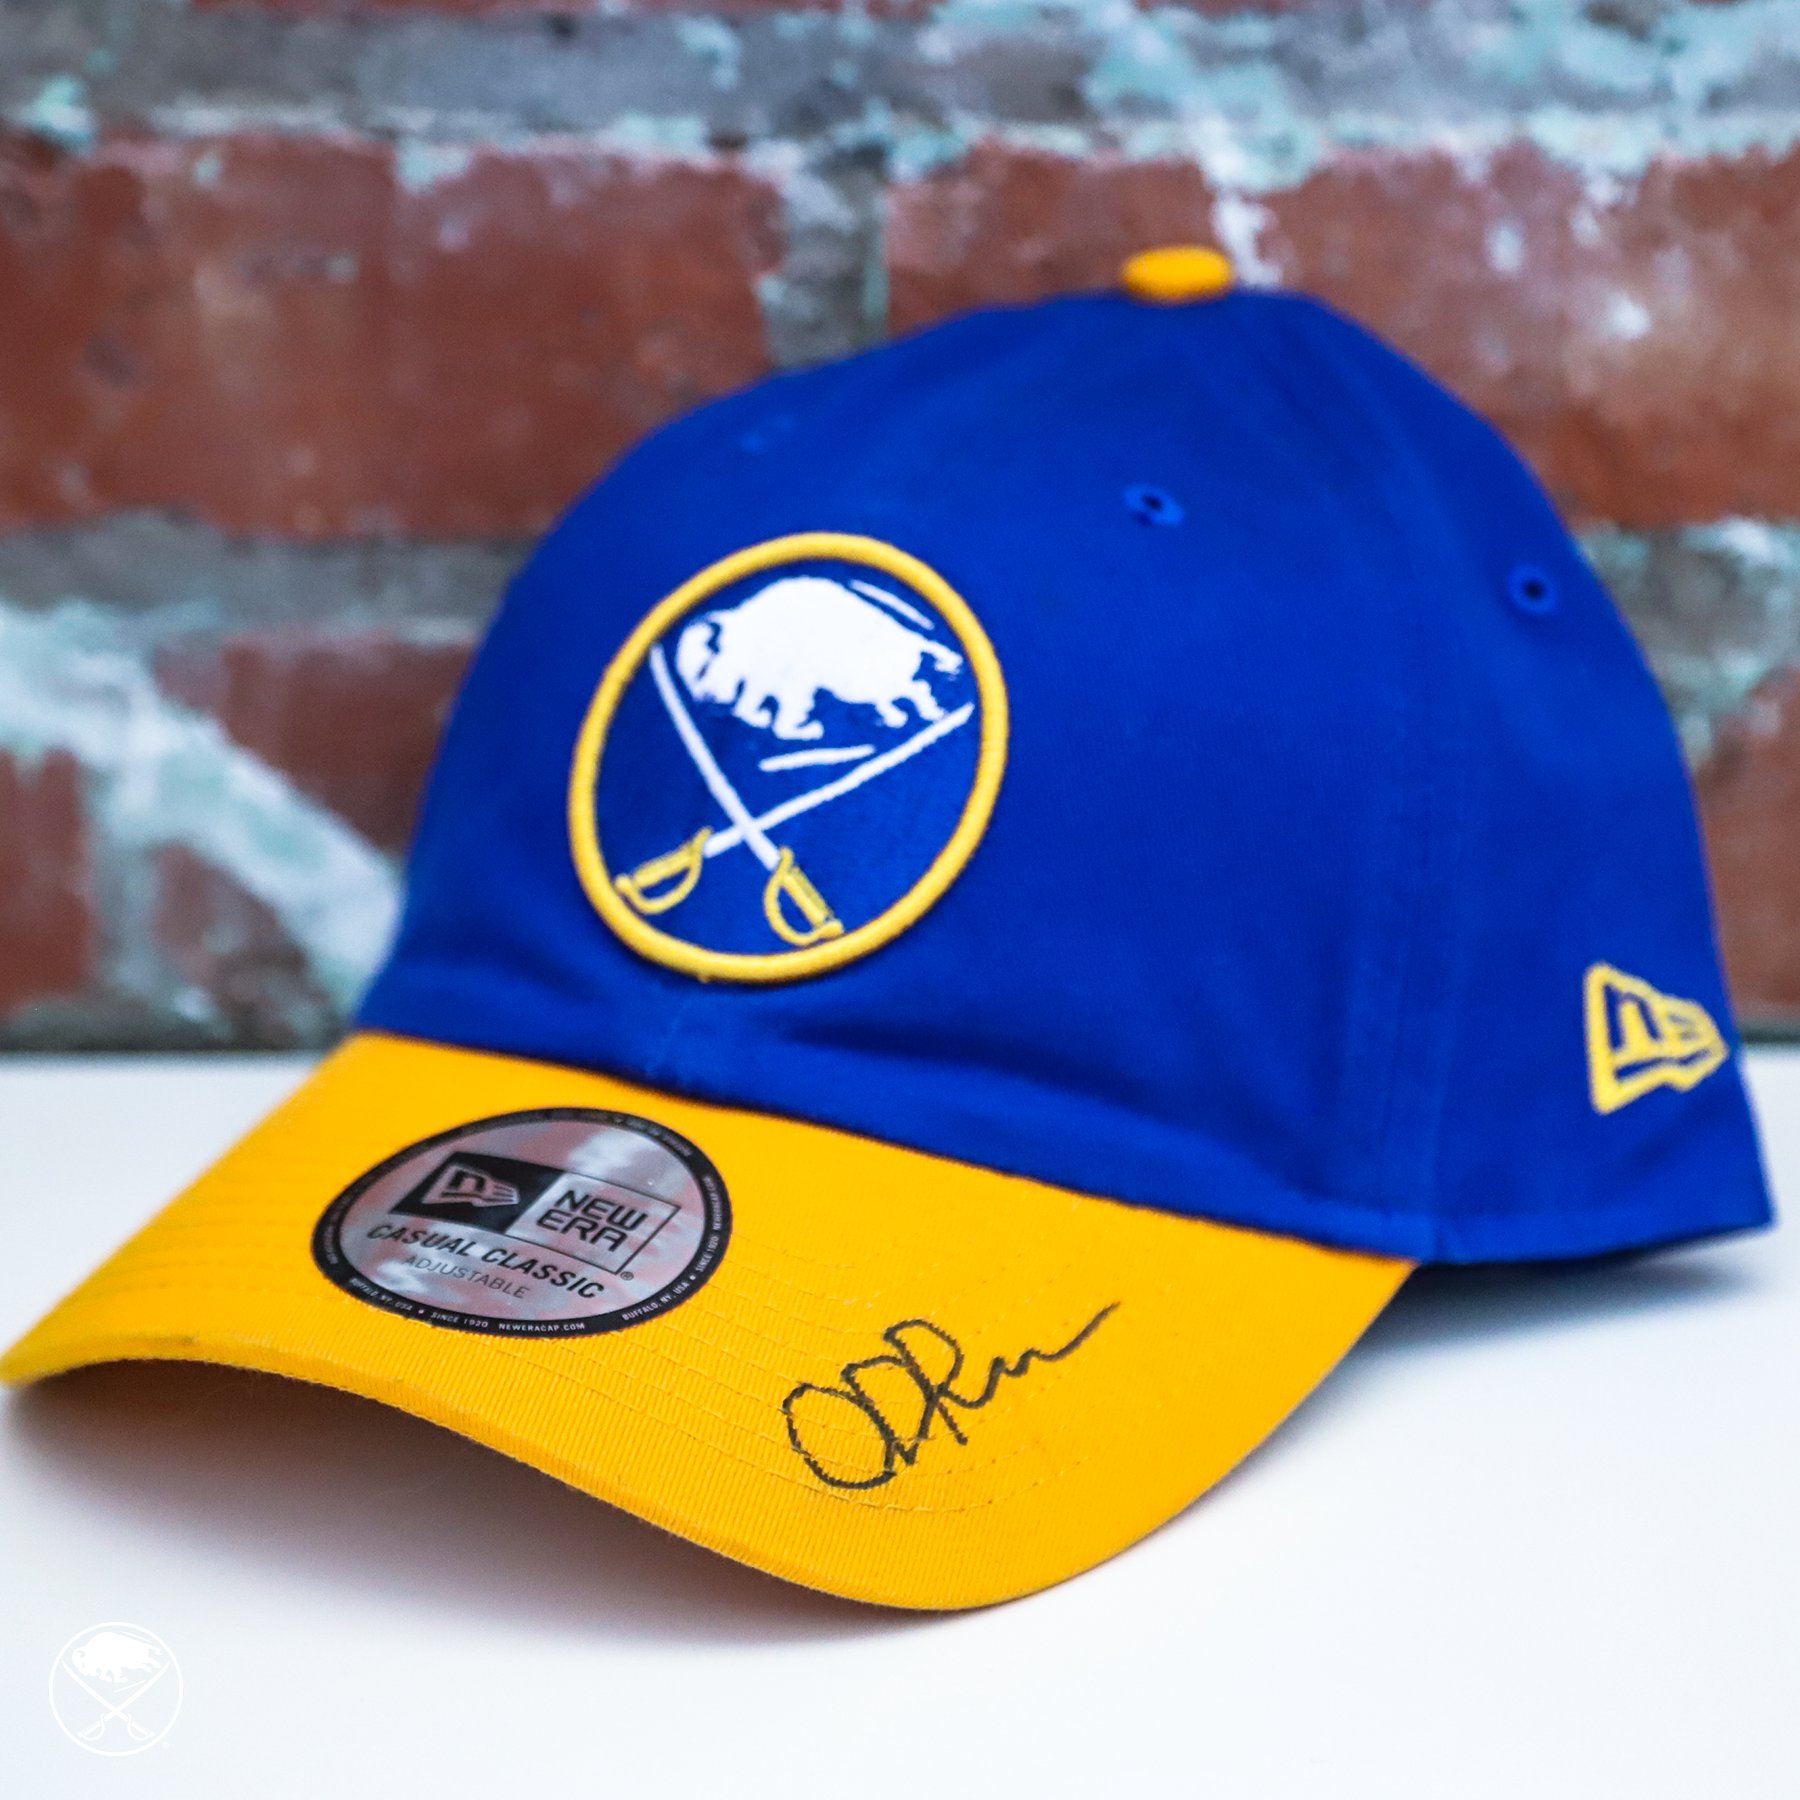 Buffalo Sabres Hats, Sabres Snapback, Sabres Caps